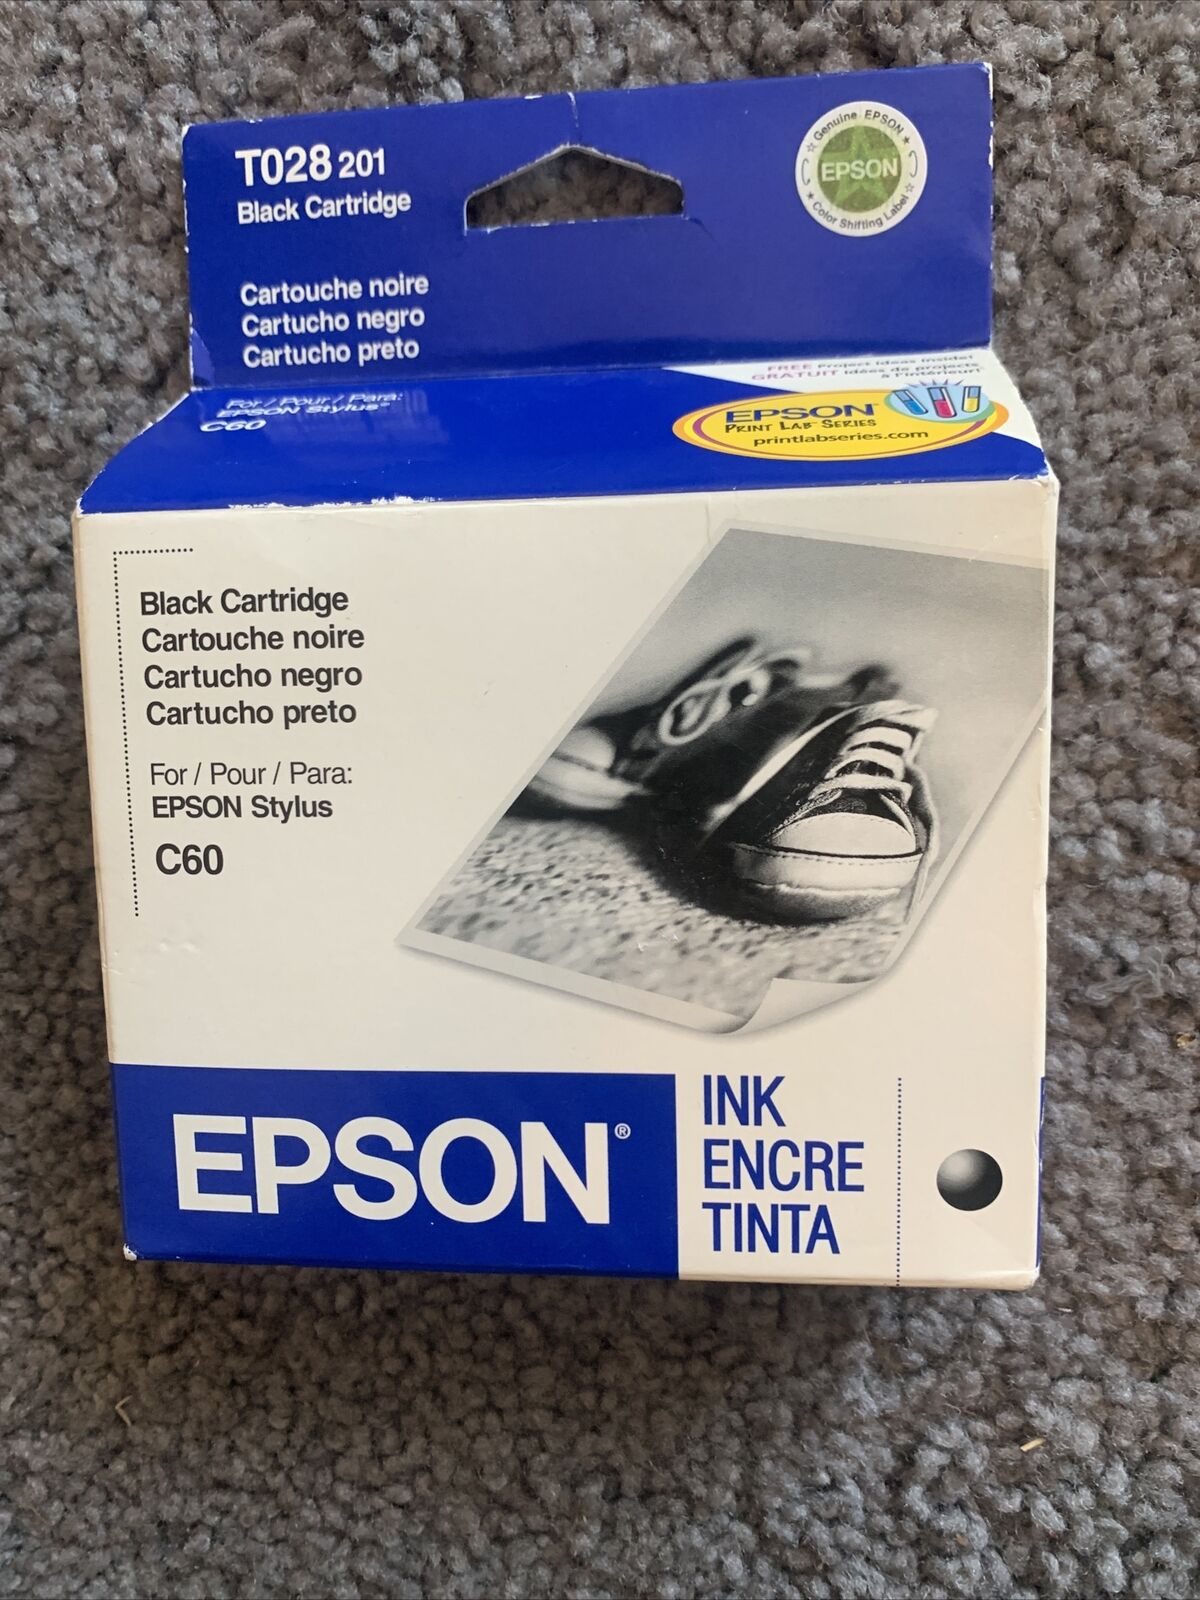 EPSON T028 201 BLACK INK CARTRIDGE EXP. 10/07